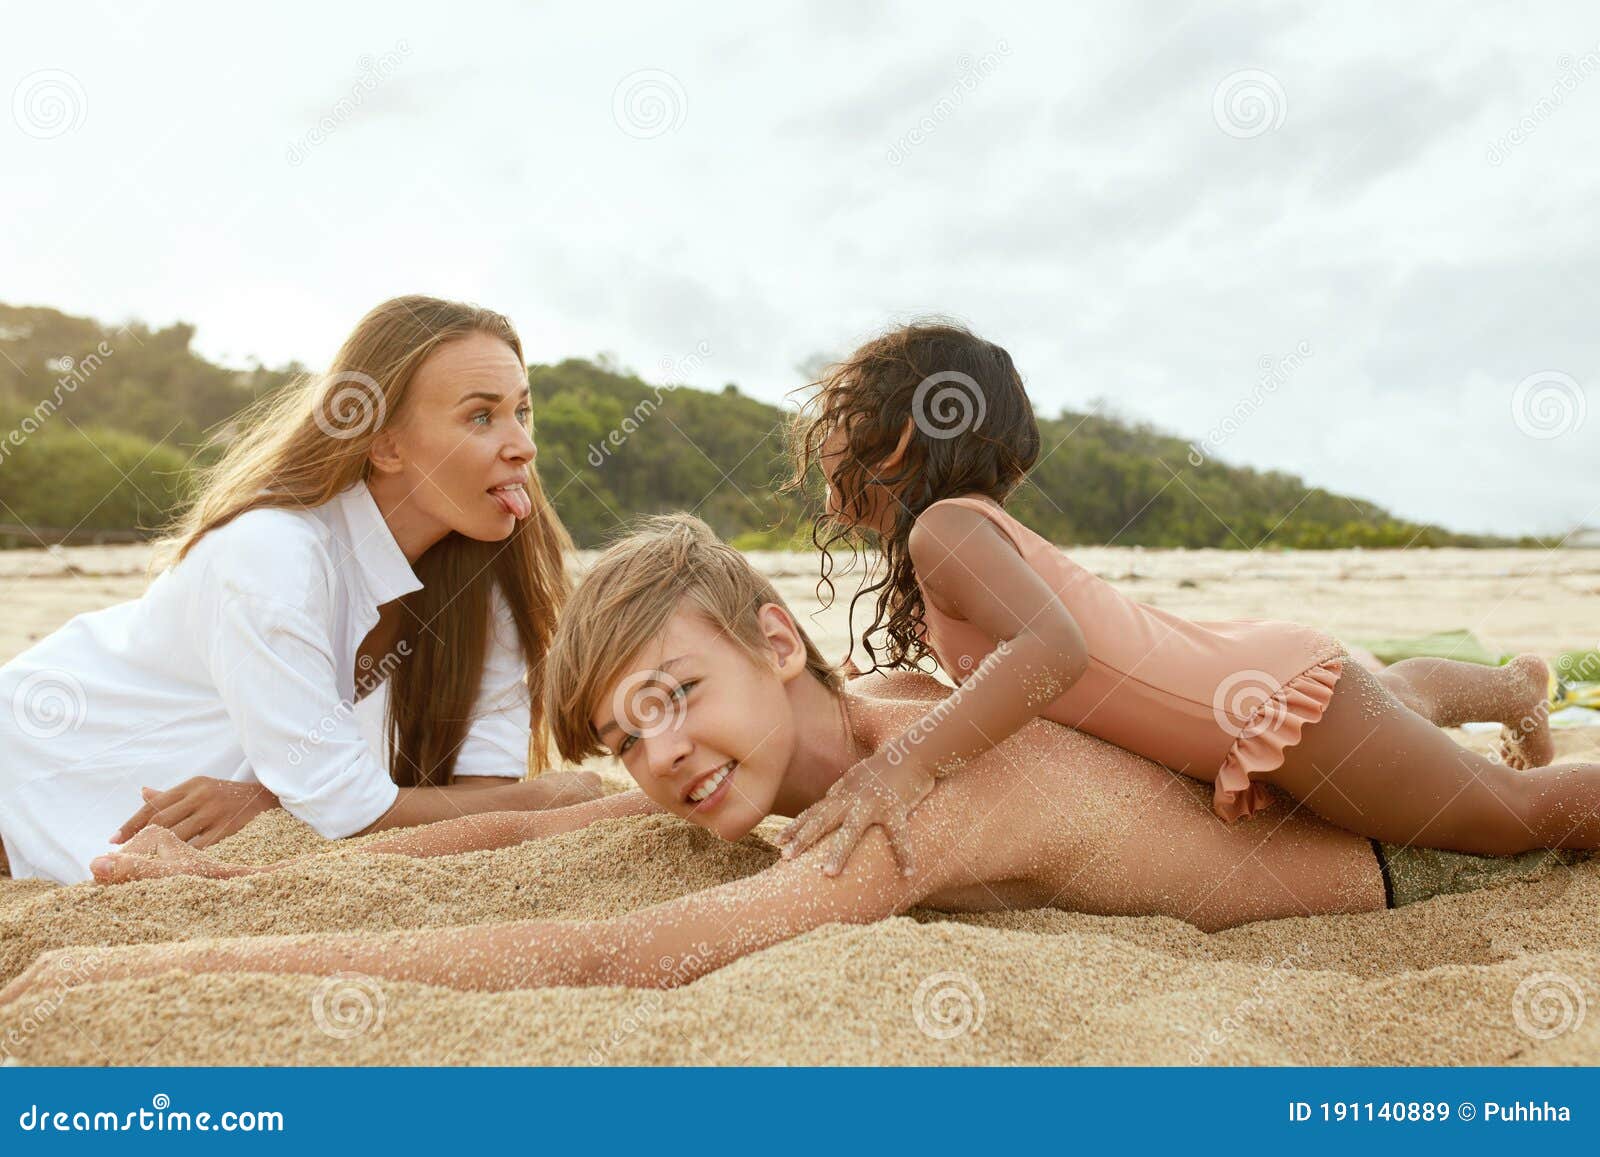 ahmed el awady recommends Junior Nudist Beach